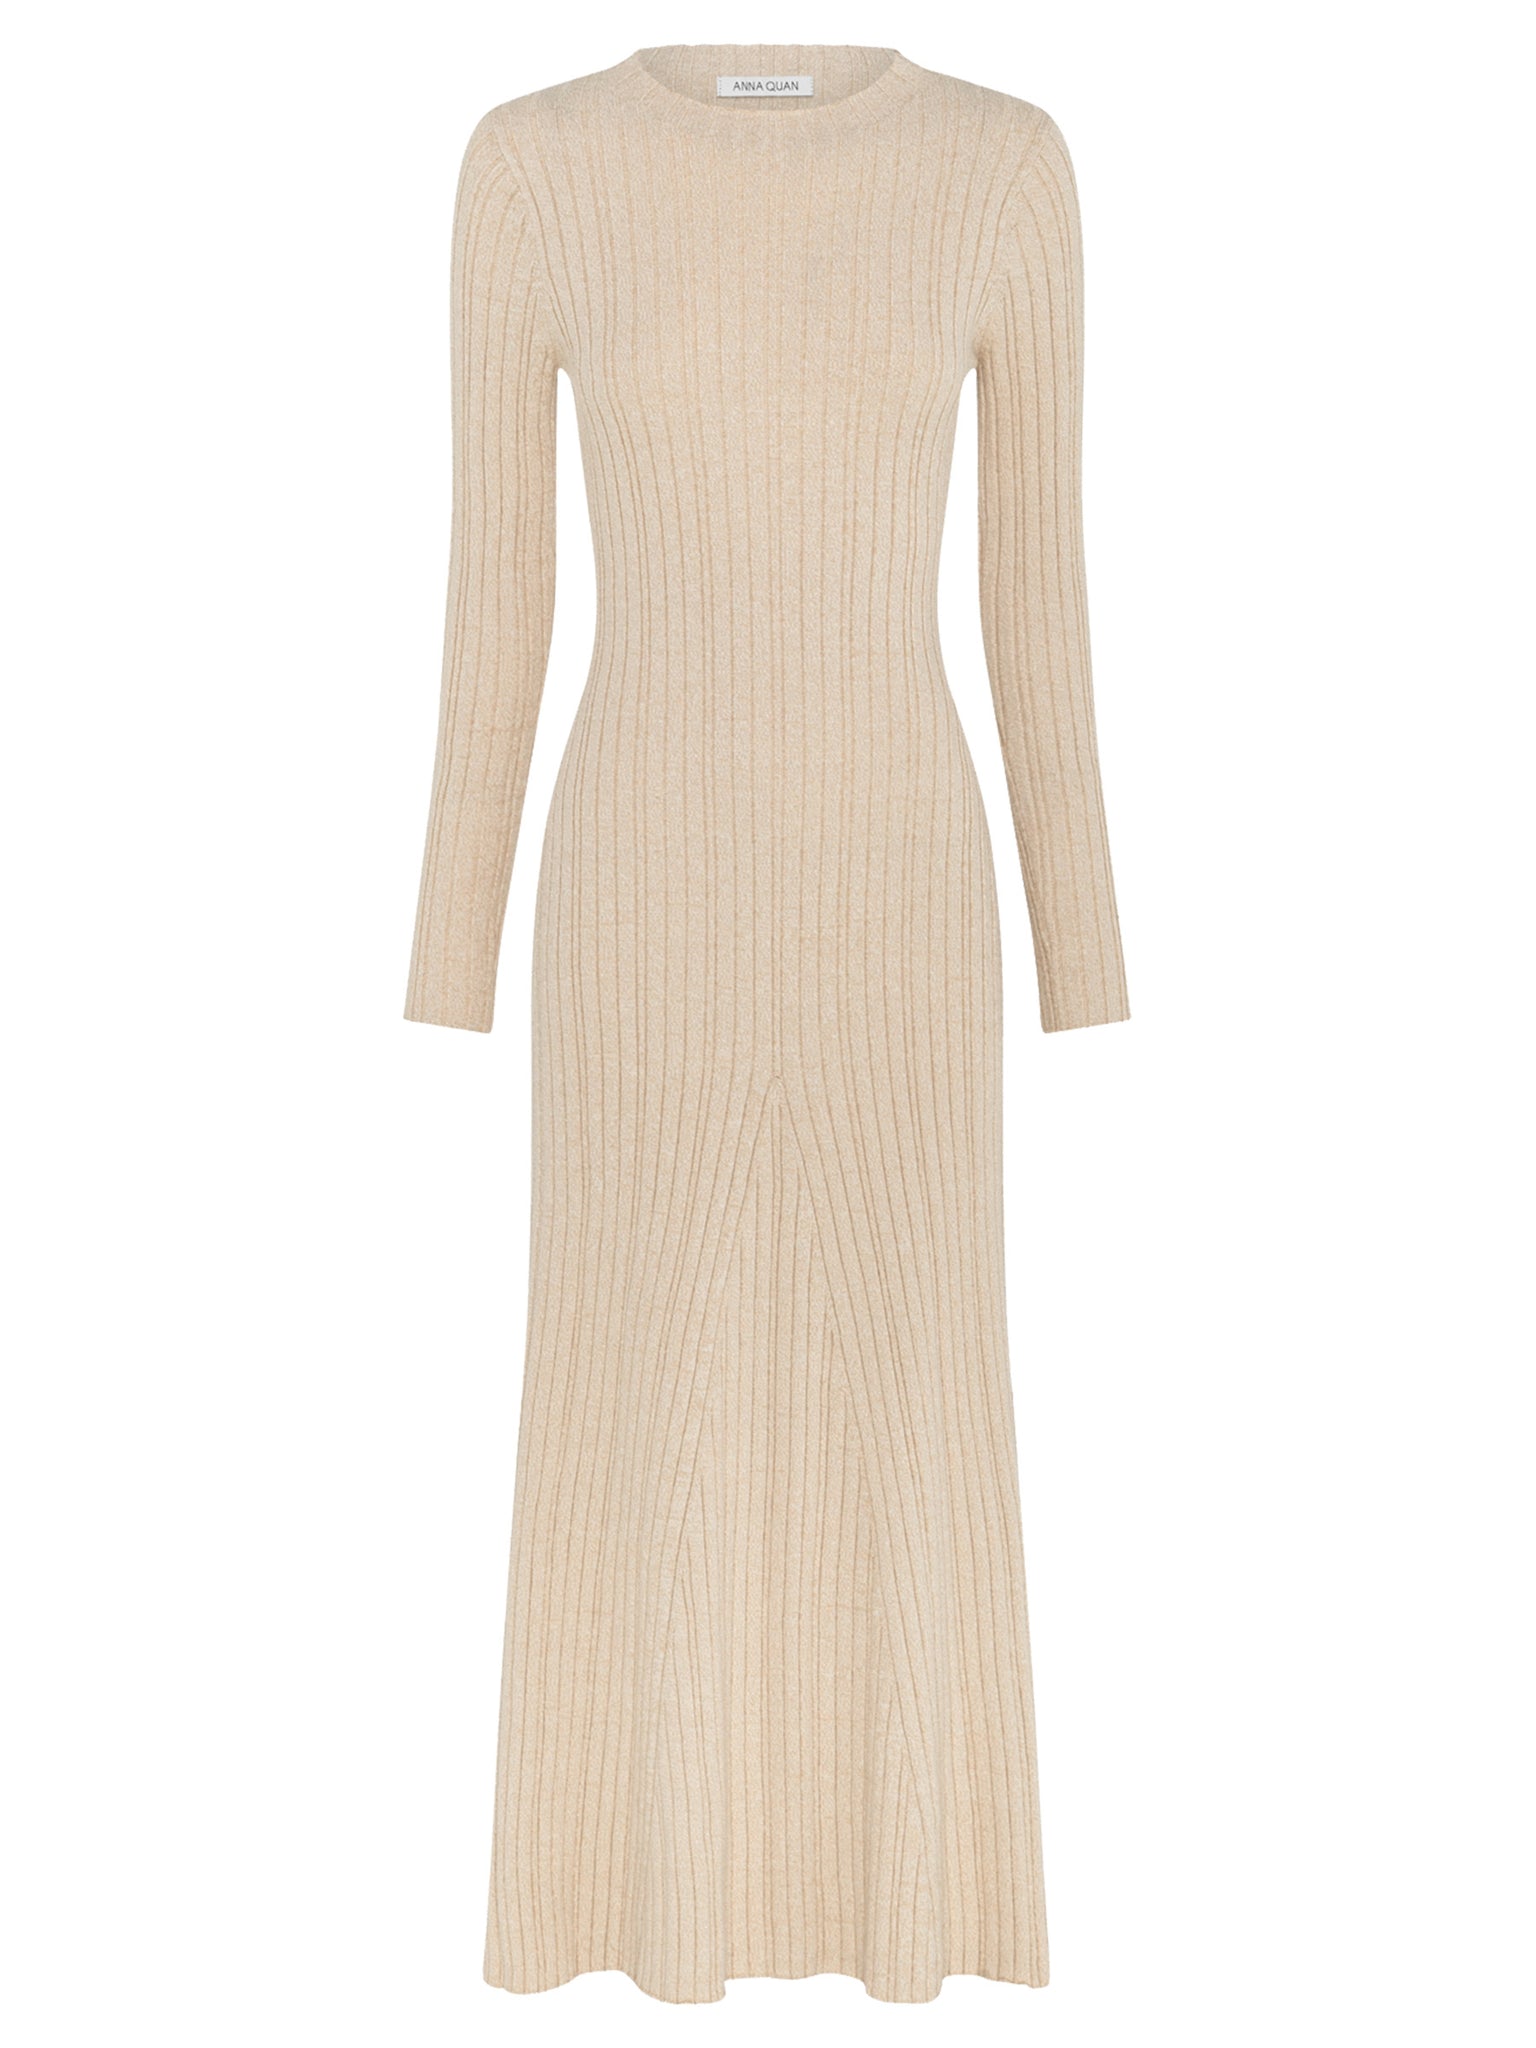 Anna Quan | Ana Long Sleeve Knit Dress in Beige Malt | The UNDONE by ...